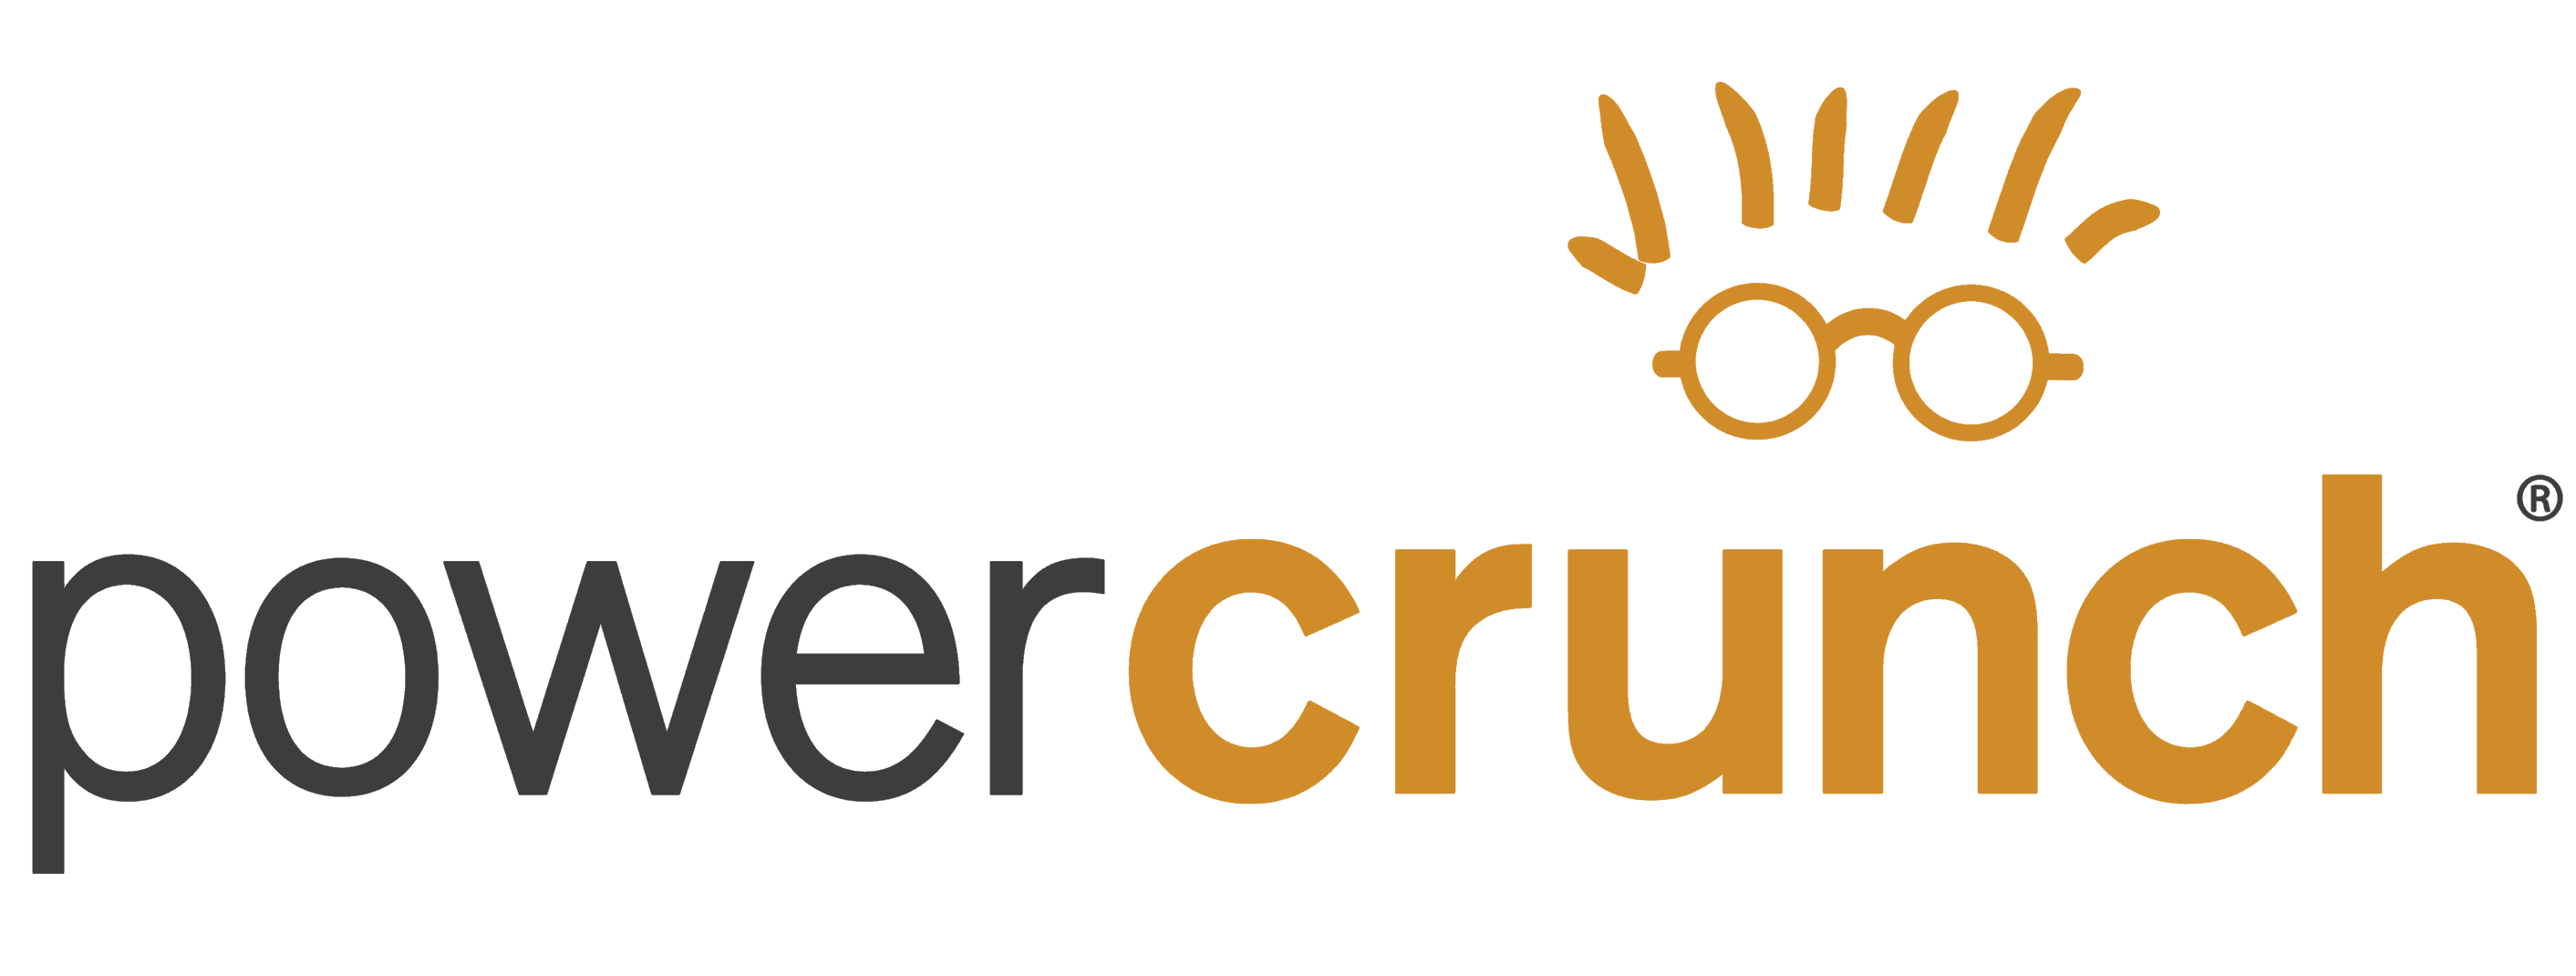 Crunch Logo - Power Crunch – Logos Download